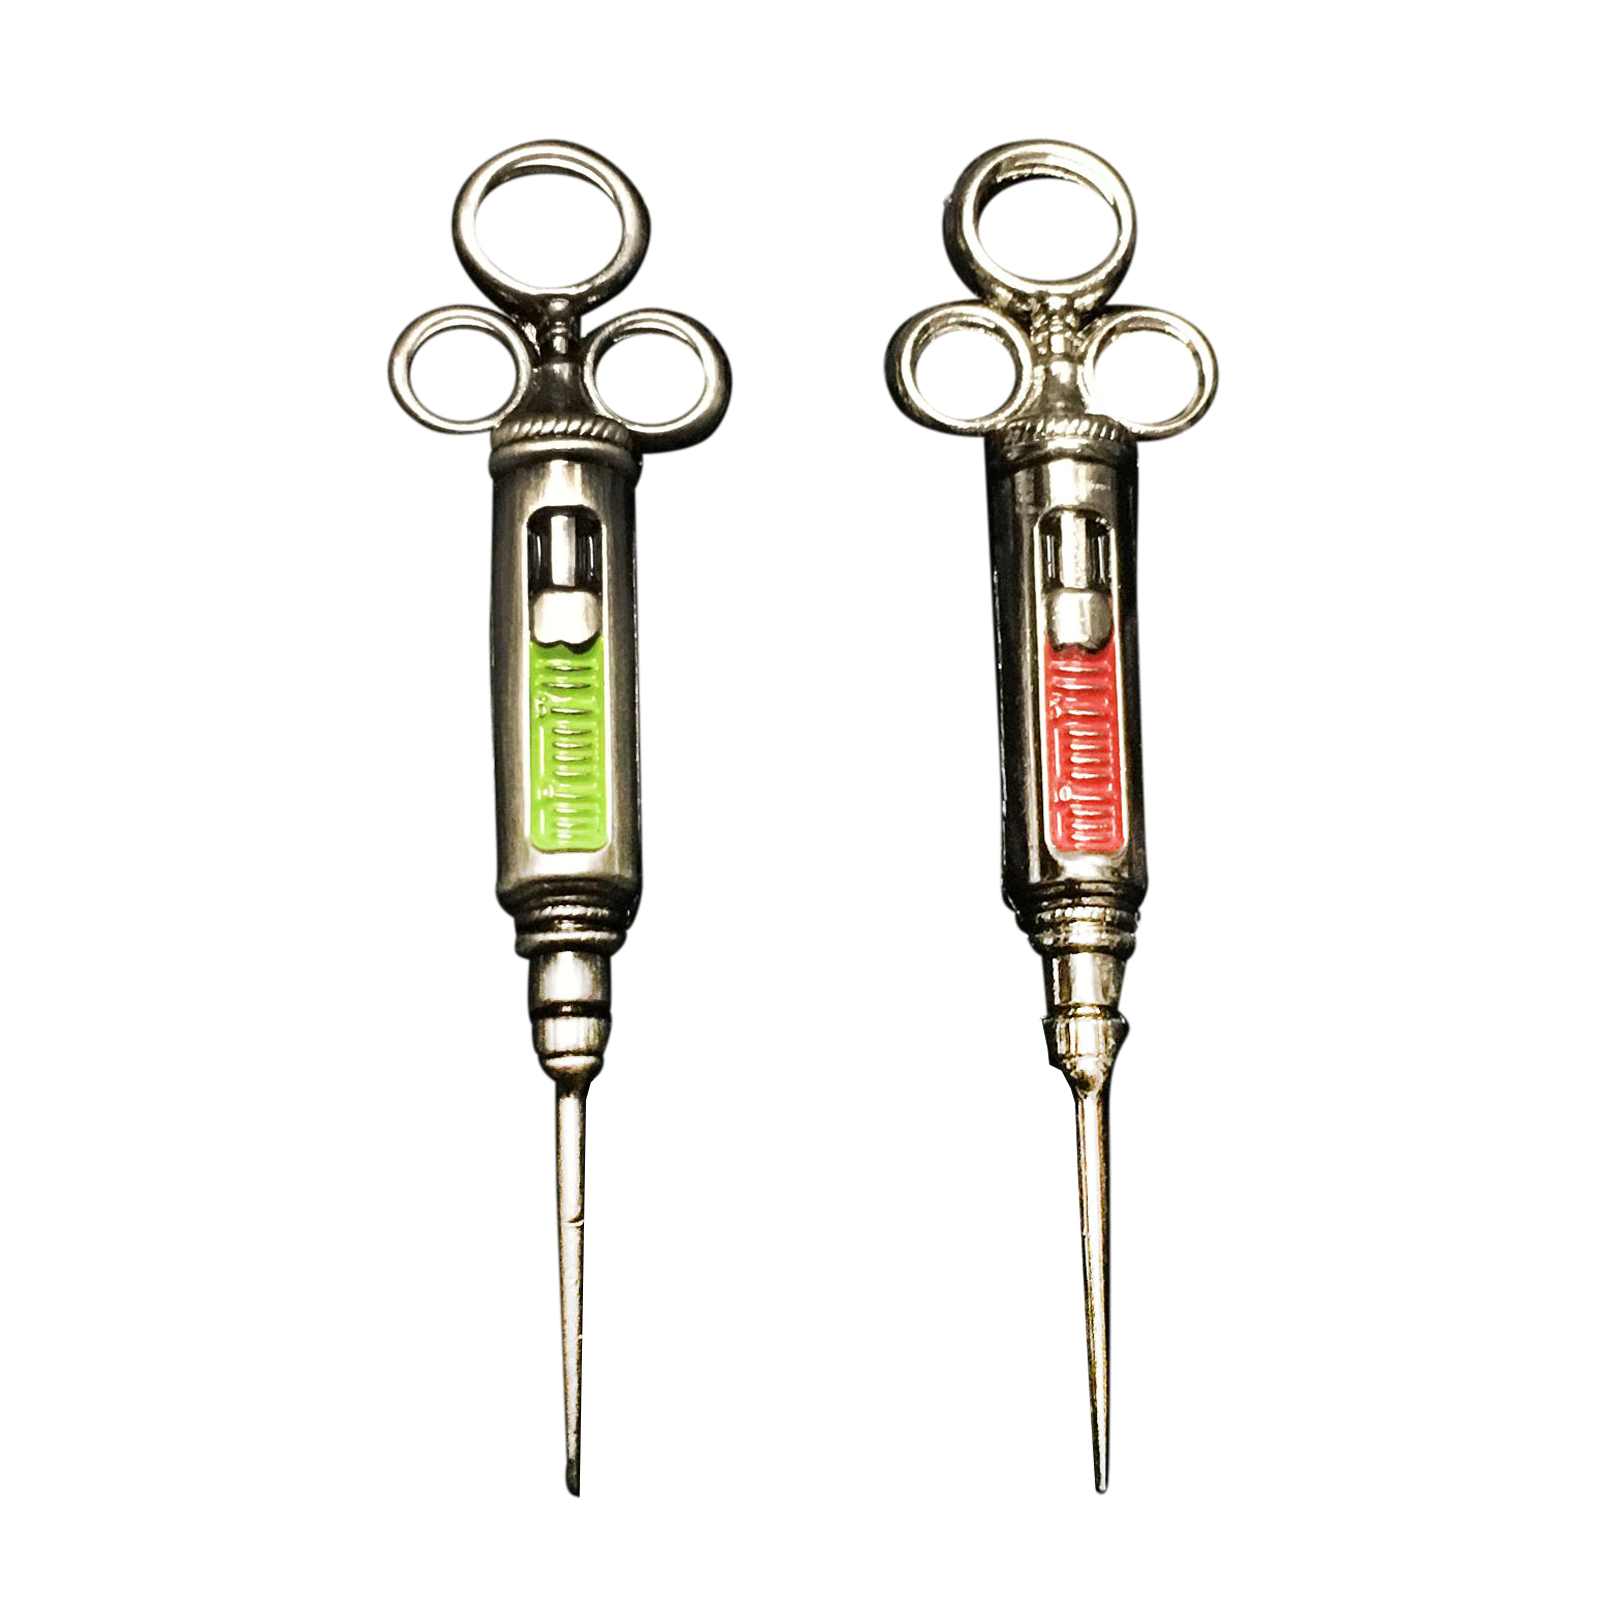 3D Vintage Syringe Pin (Glows in the dark!)